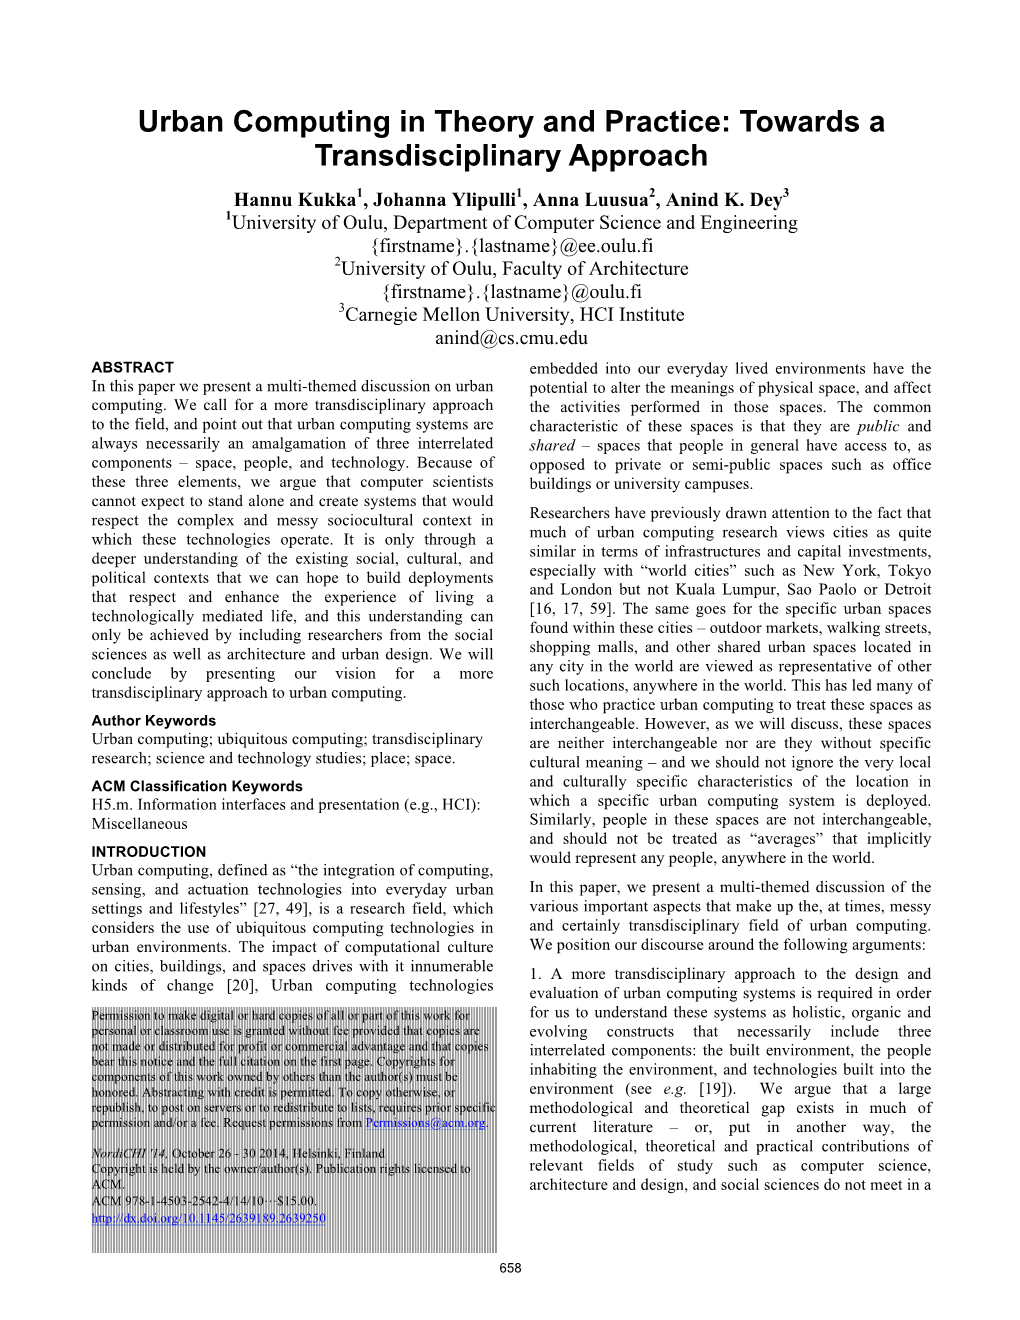 Urban Computing in Theory and Practice: Towards a Transdisciplinary Approach Hannu Kukka1, Johanna Ylipulli1, Anna Luusua2, Anind K